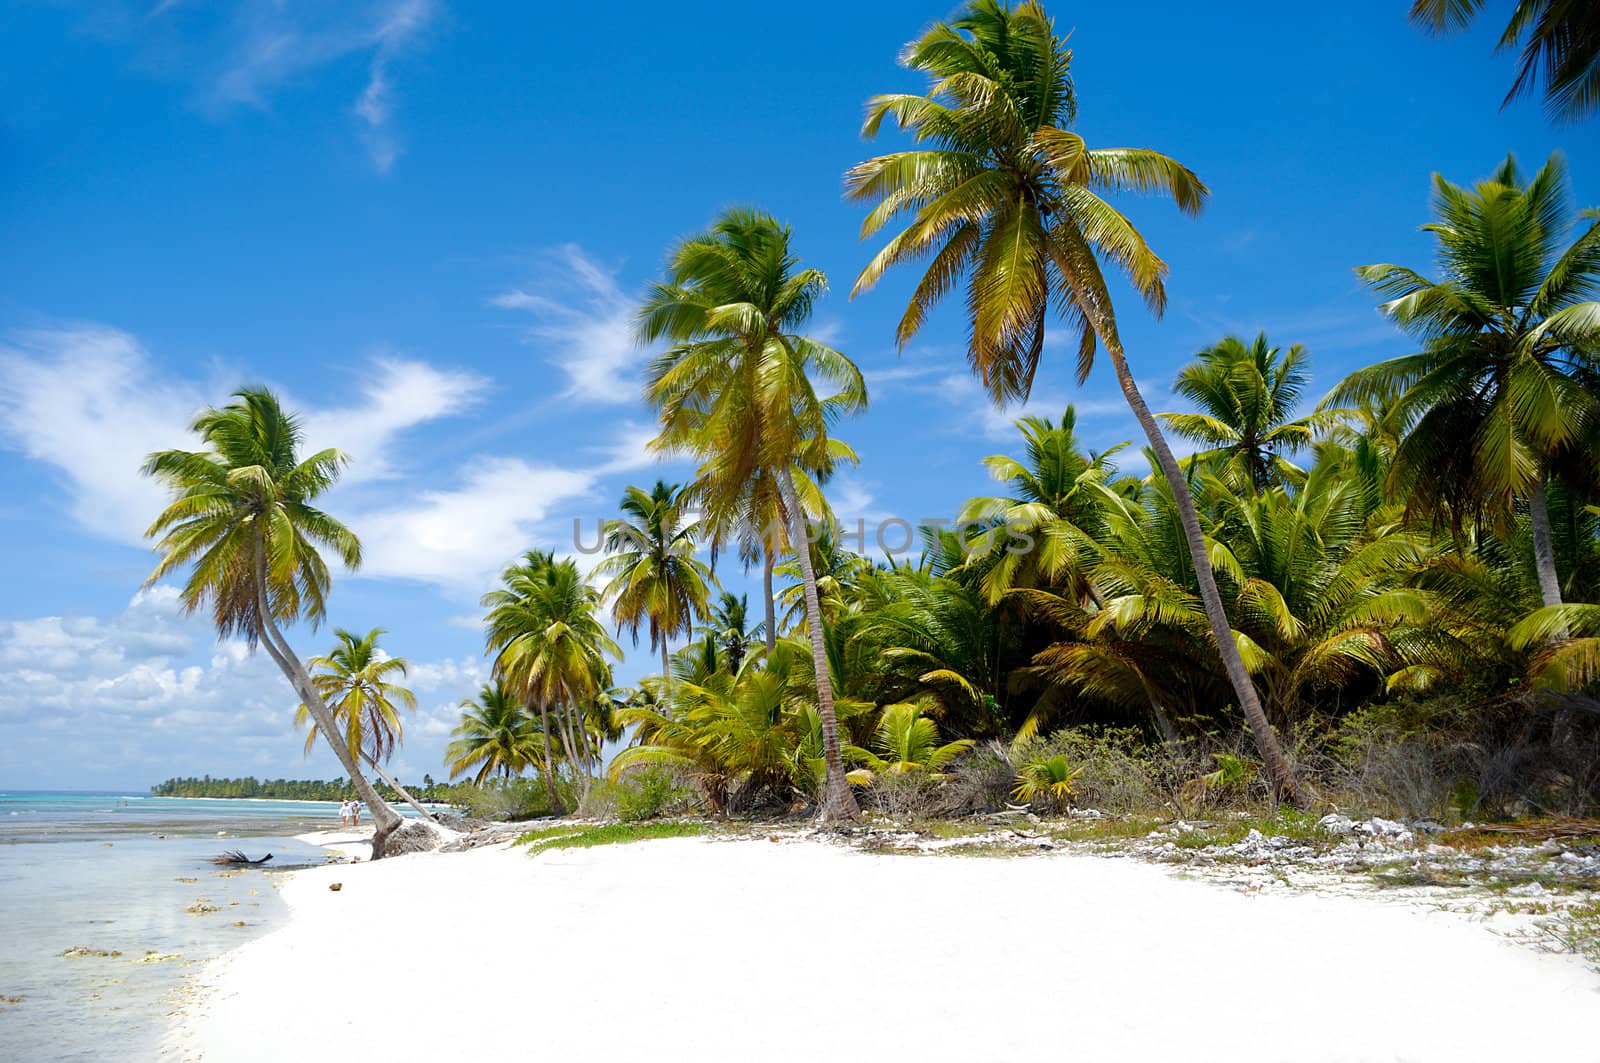 Paradise beach at Saona Island, Dominican Republic